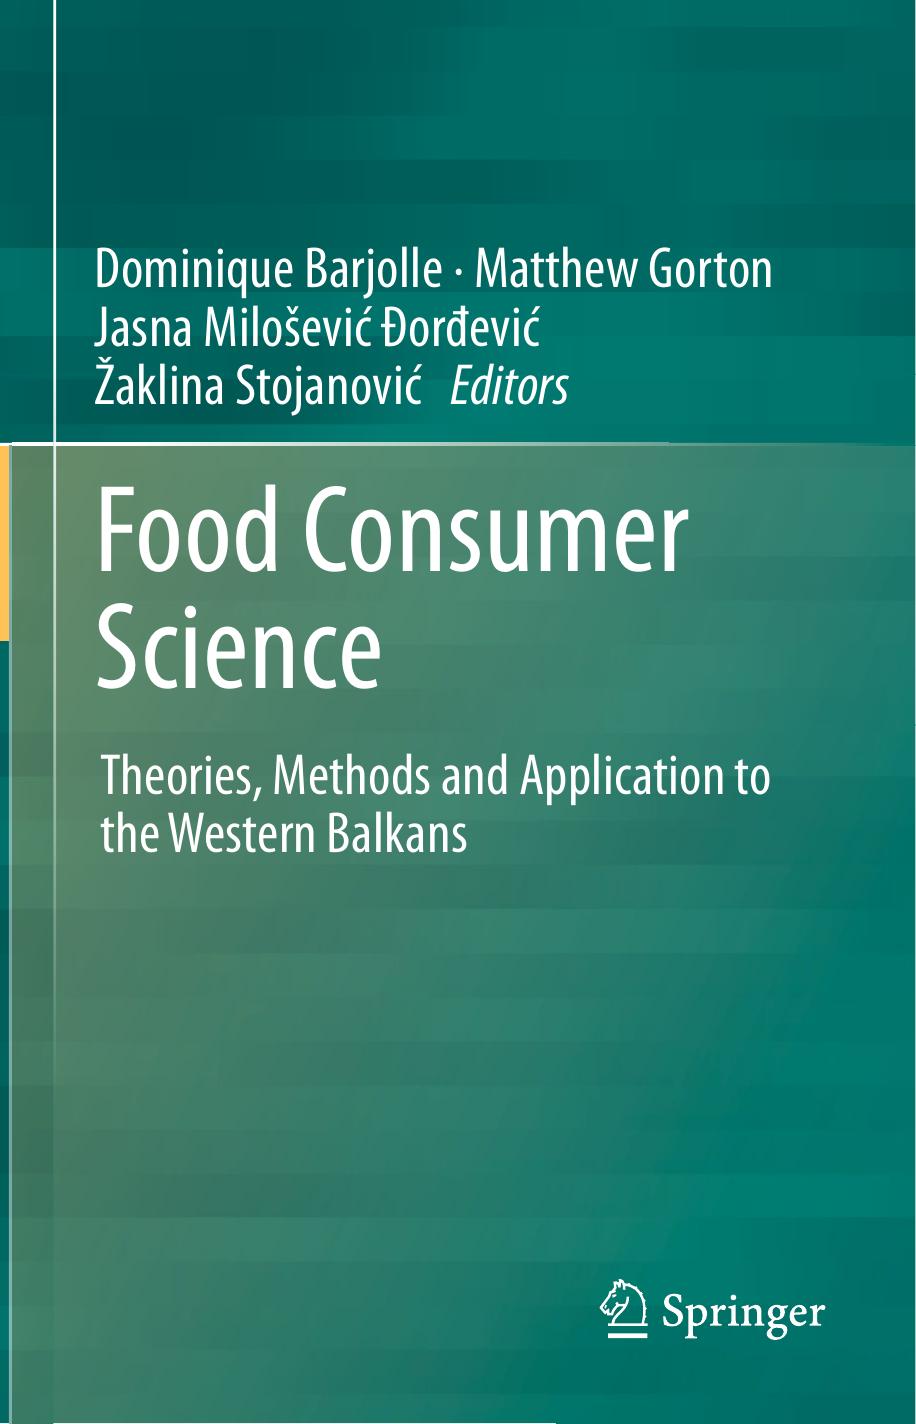 Food Consumer Science (1) 2013